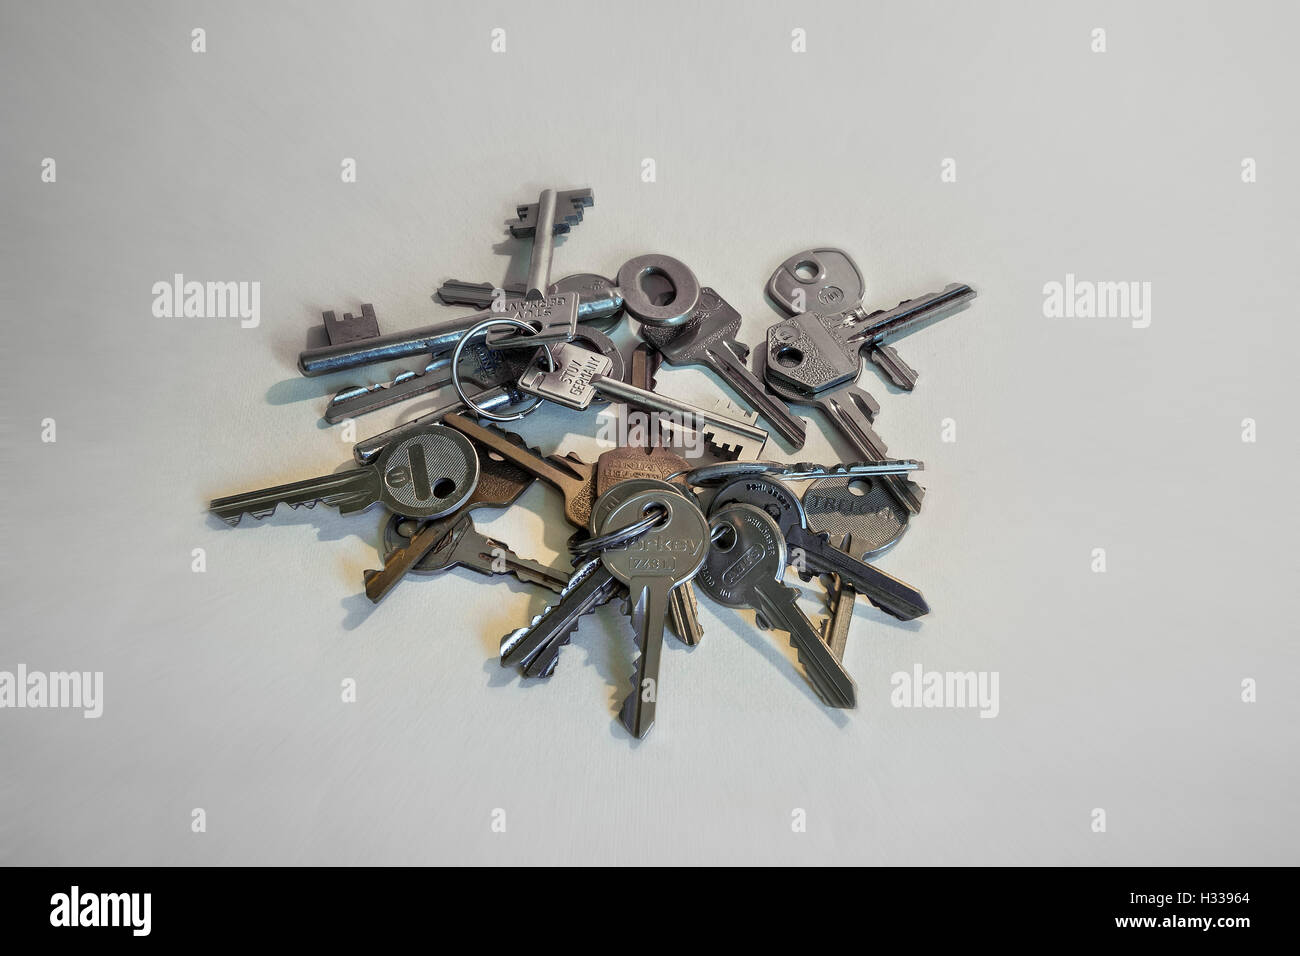 Different keys, white background Stock Photo